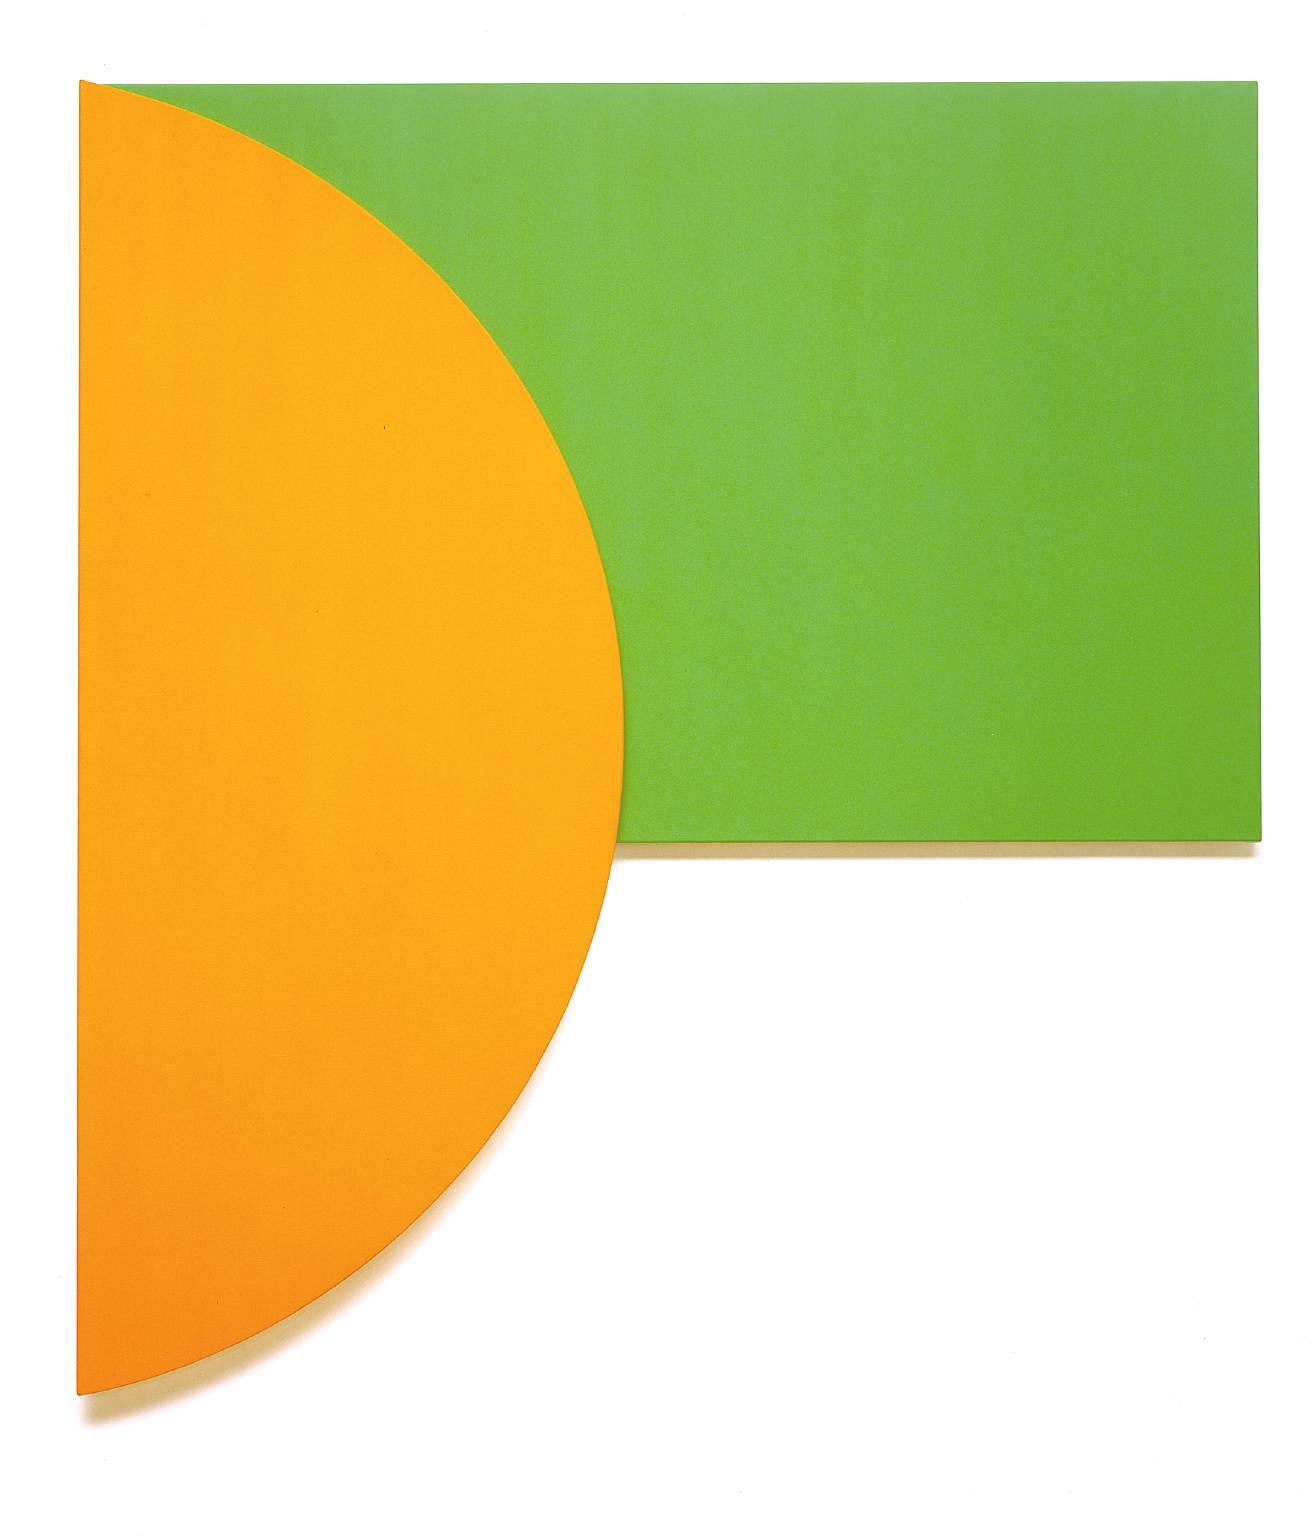 Ellsworth Kelly - Orange Relief with Green